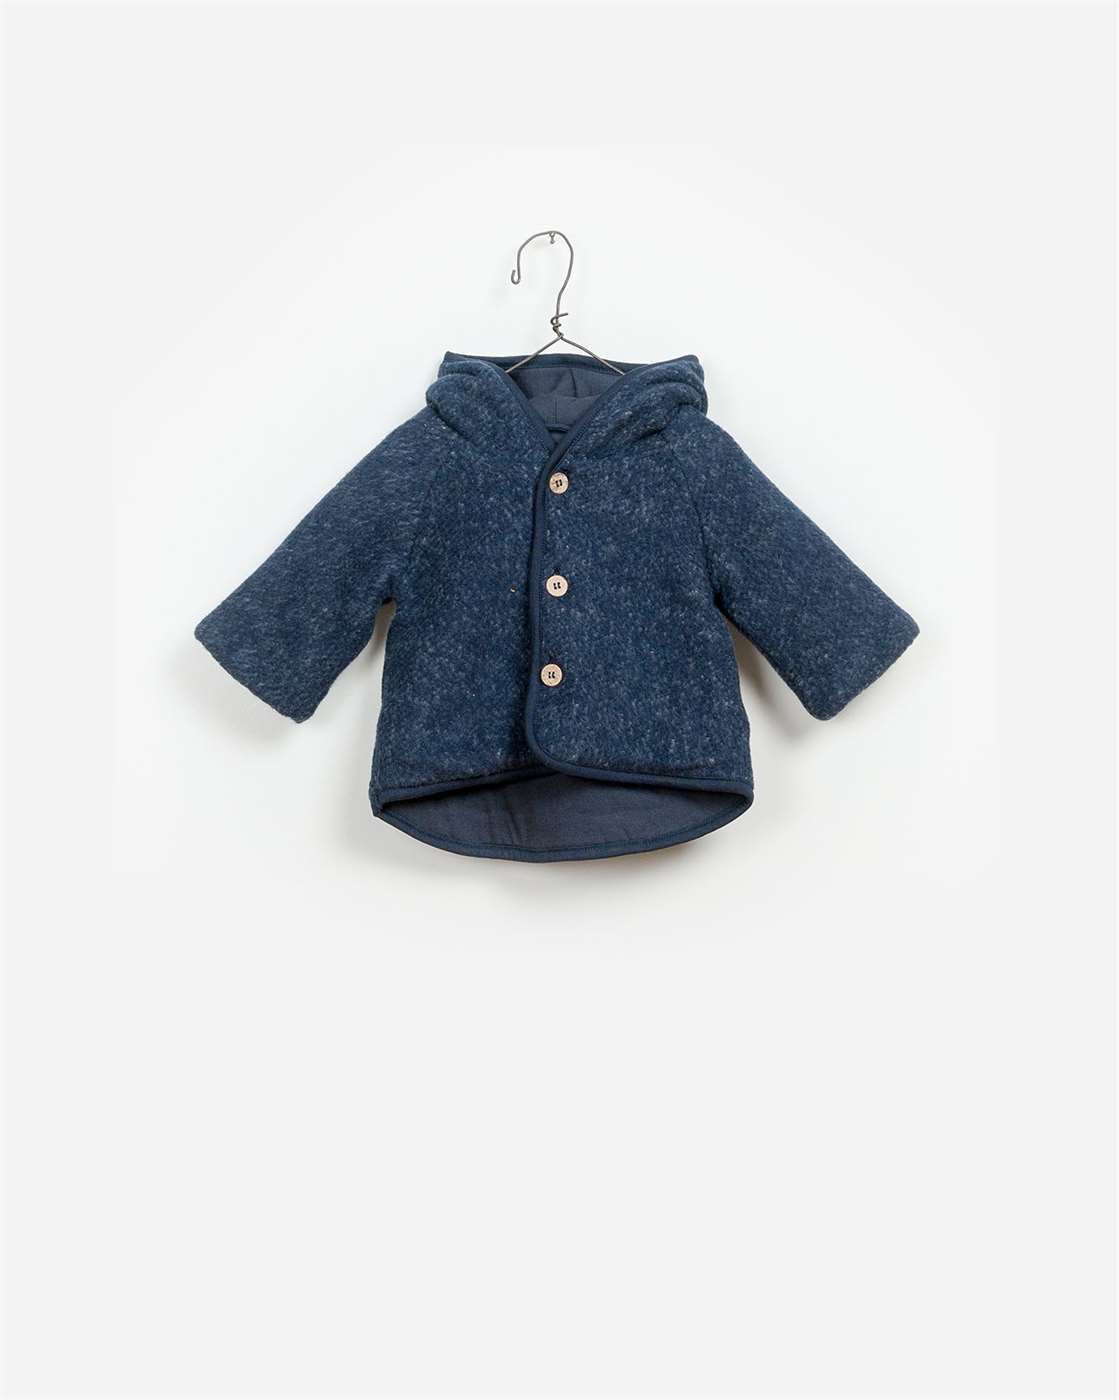 BeeBoo|BeeBoo PlayUp vêtements bébé baby clothes manteau Felpa coat coton cotton bleu blue